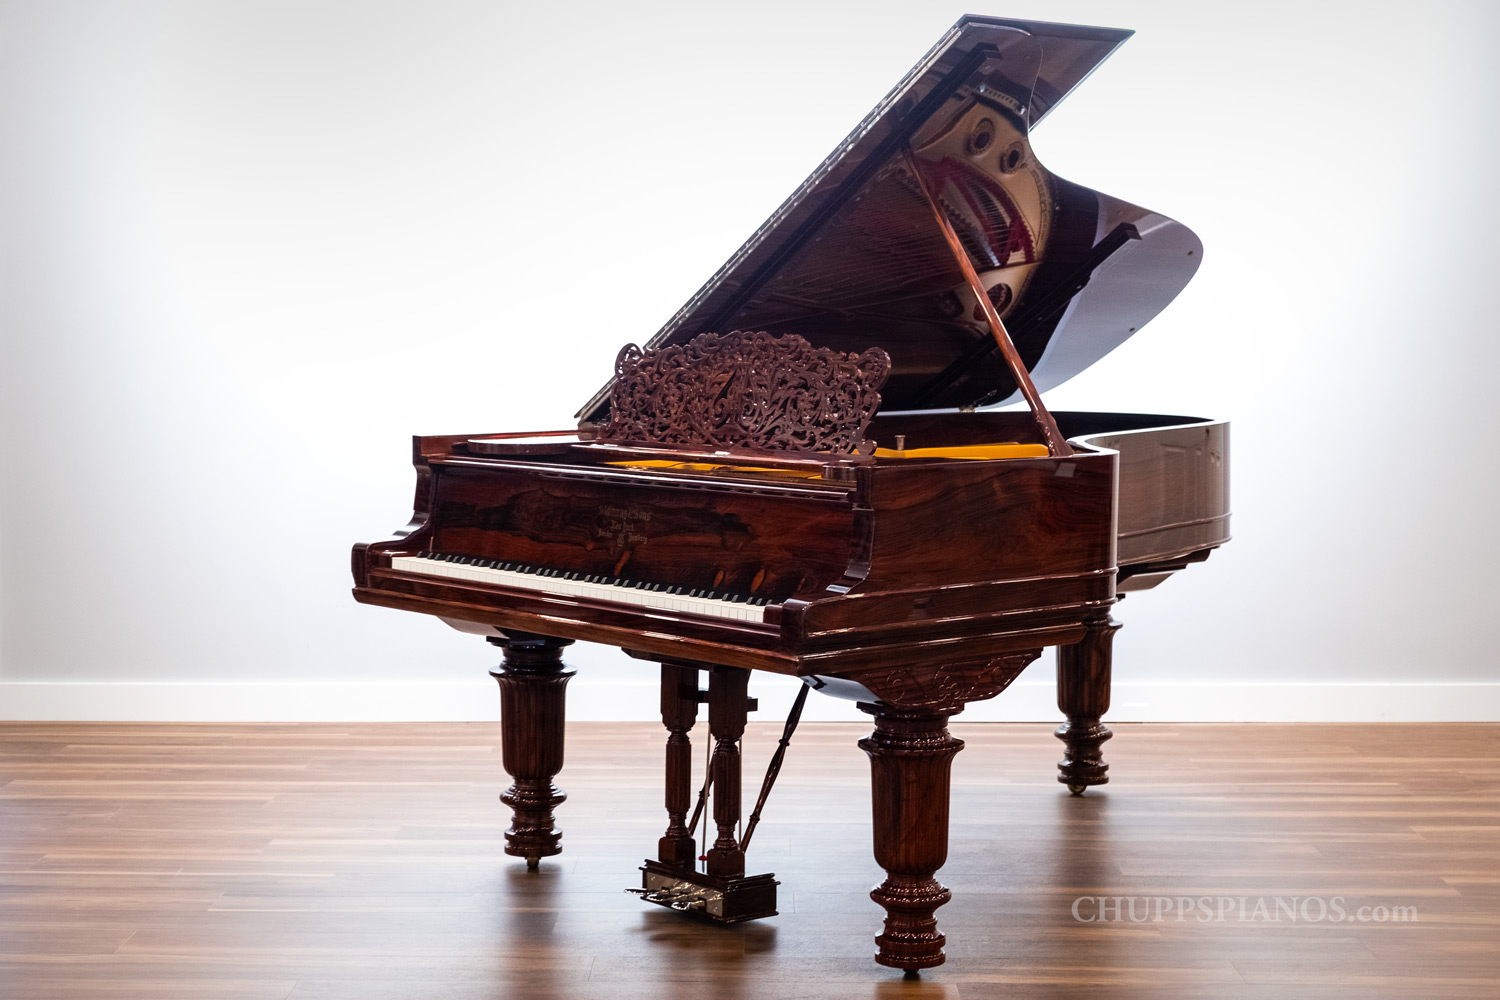 yamaha concert grand piano